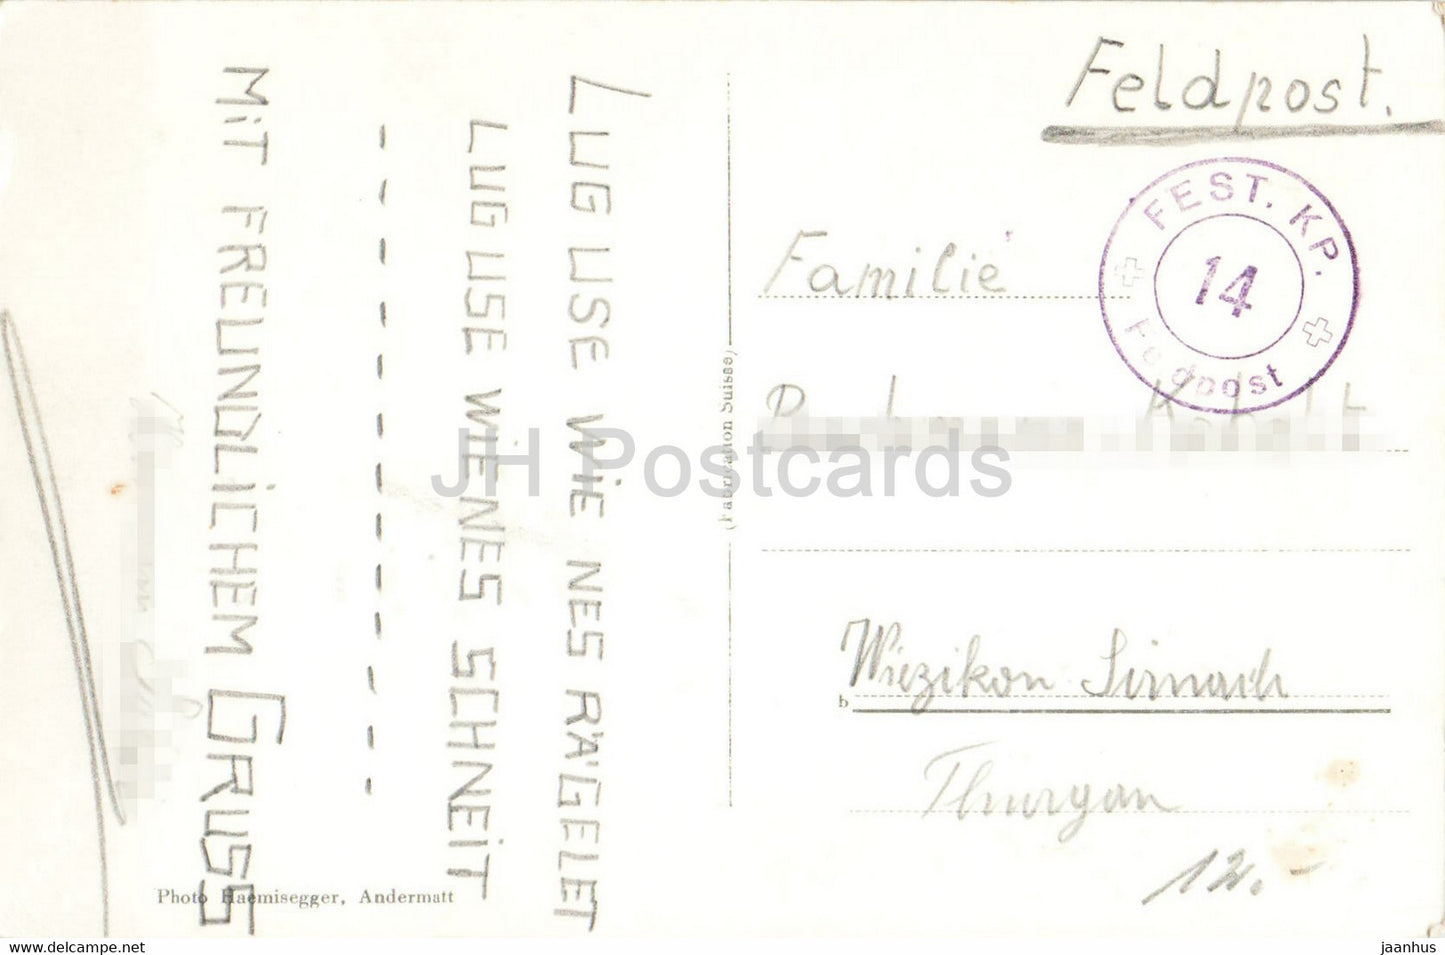 Andermatt gegen Urnerloch - 1102 - Feldpost - military mail - old postcard - Switzerland - used